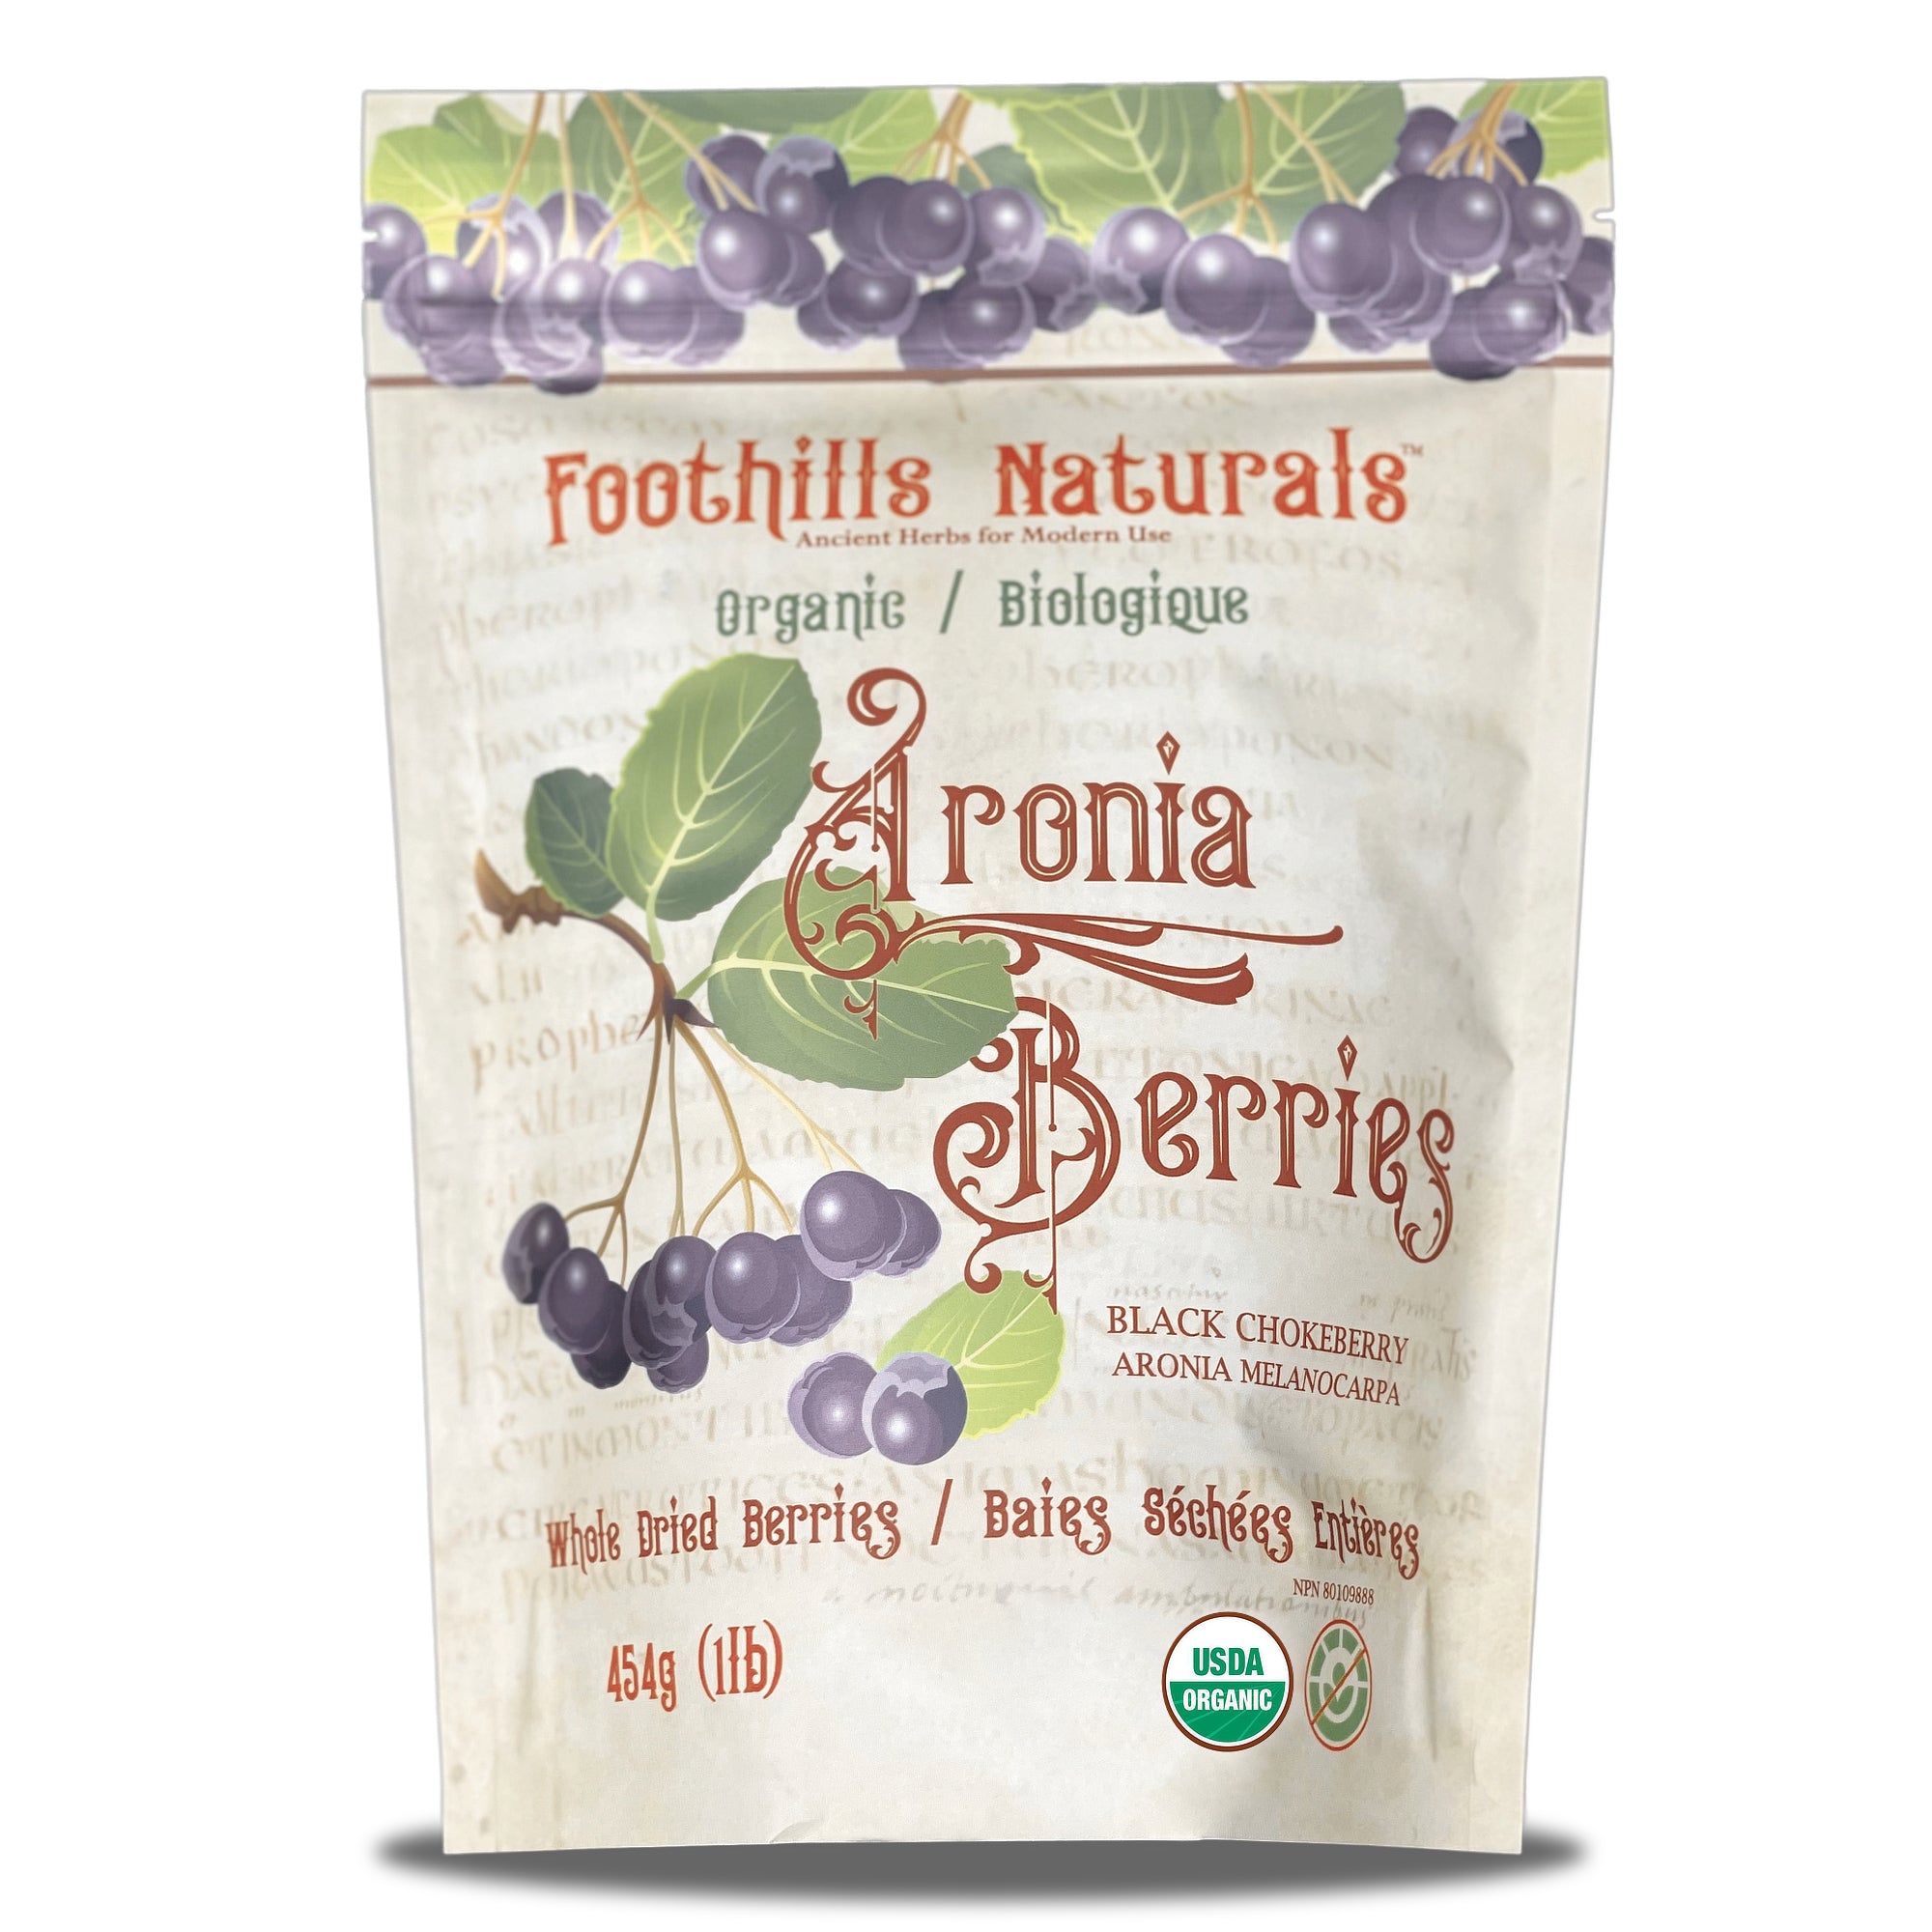 Aronia / Black Chokeberry Organic - Whole berries